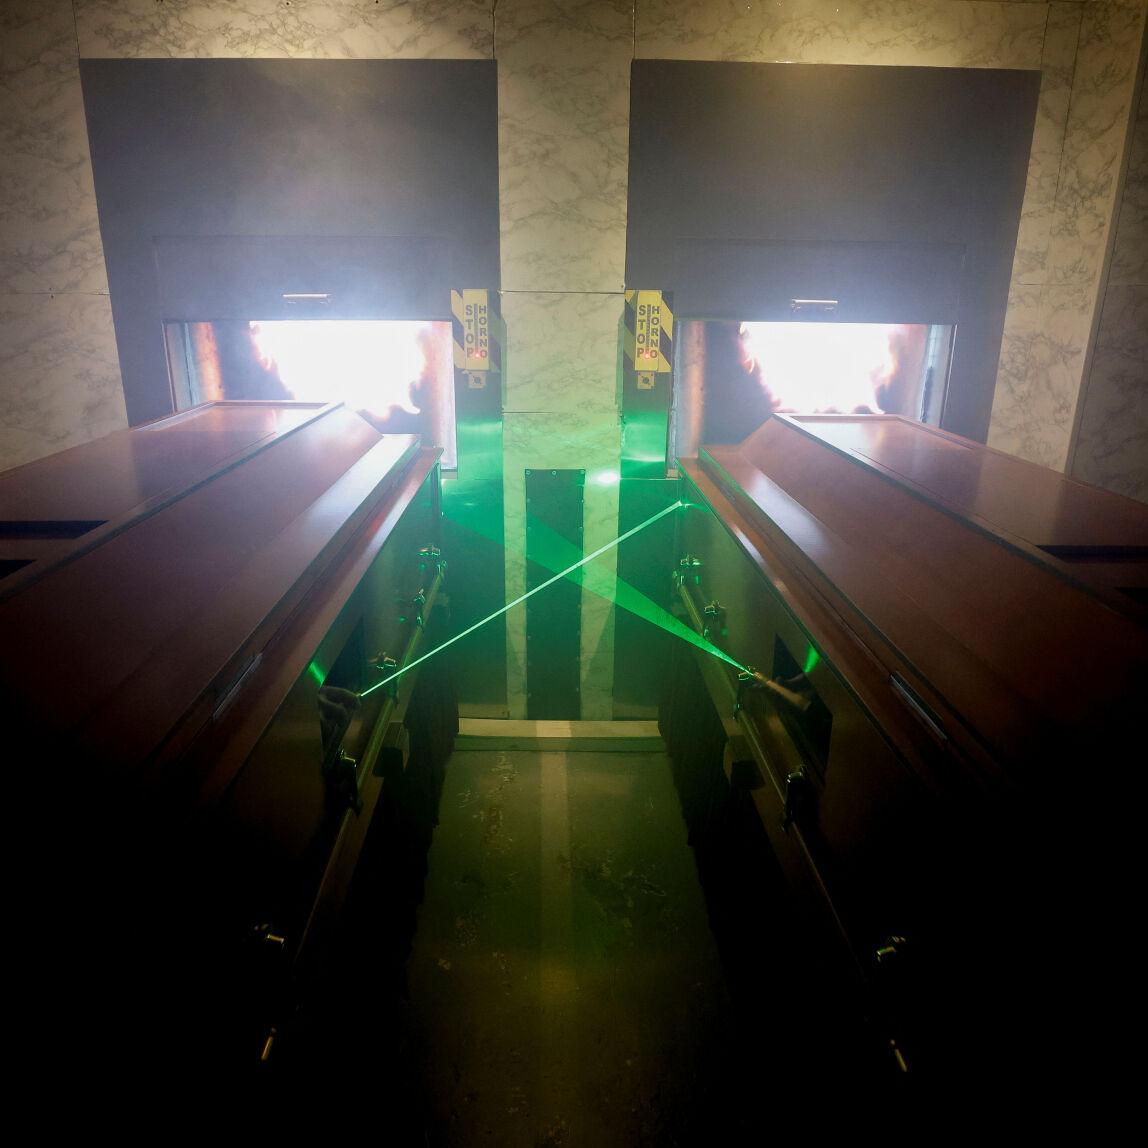 World's smallest escape room is a coffin